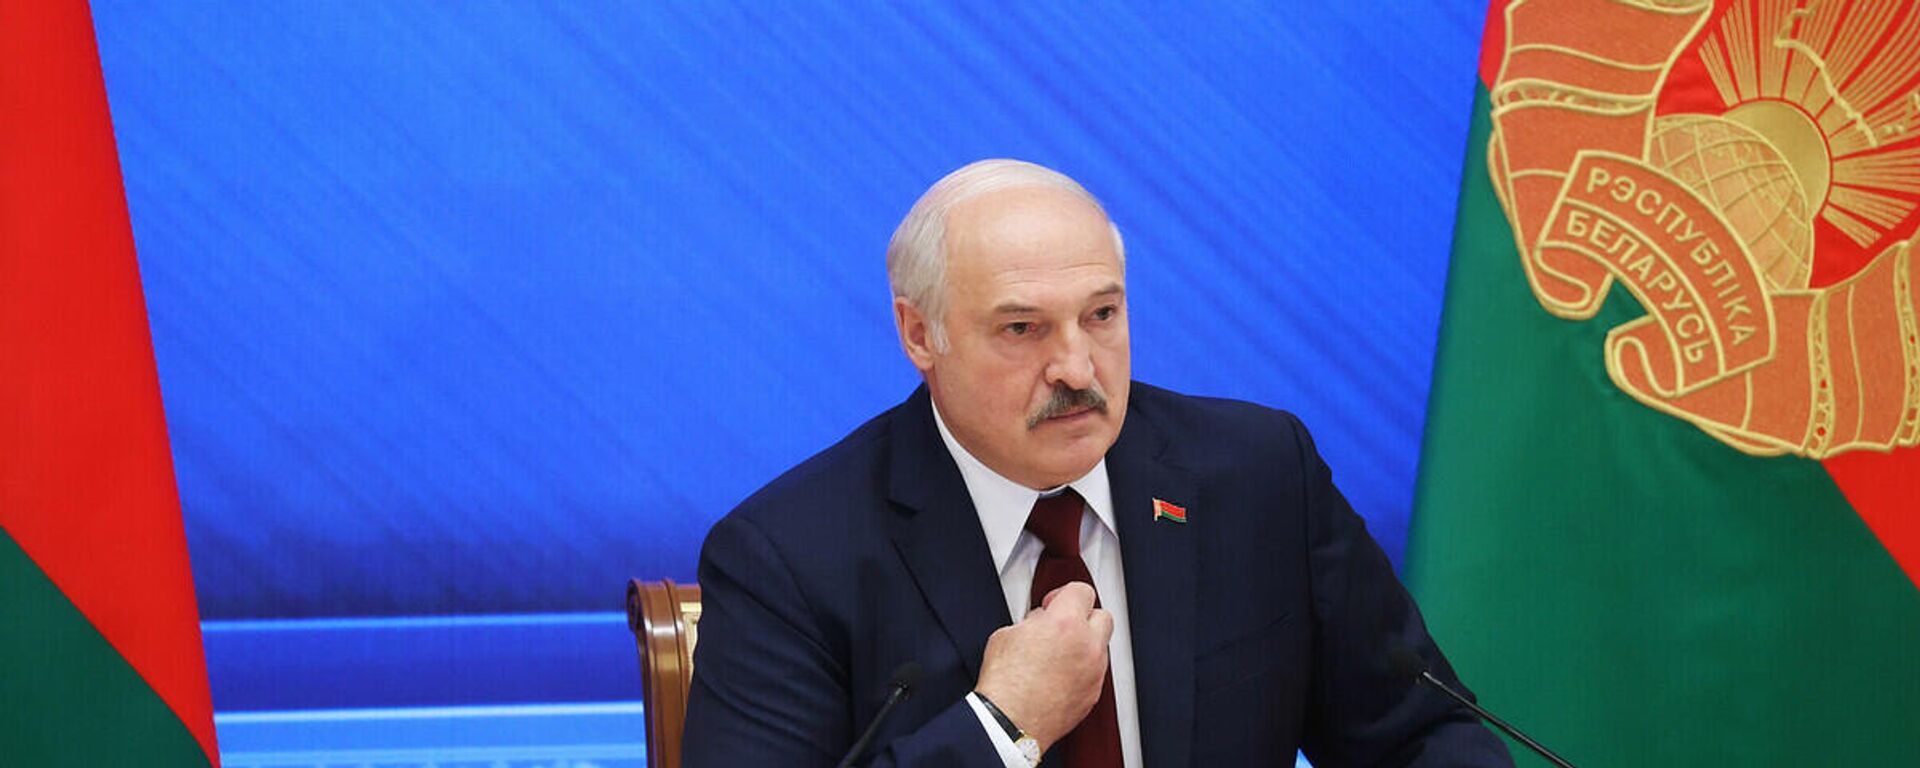 Президент Белоруссии Александр Лукашенко - Sputnik Литва, 1920, 13.08.2021